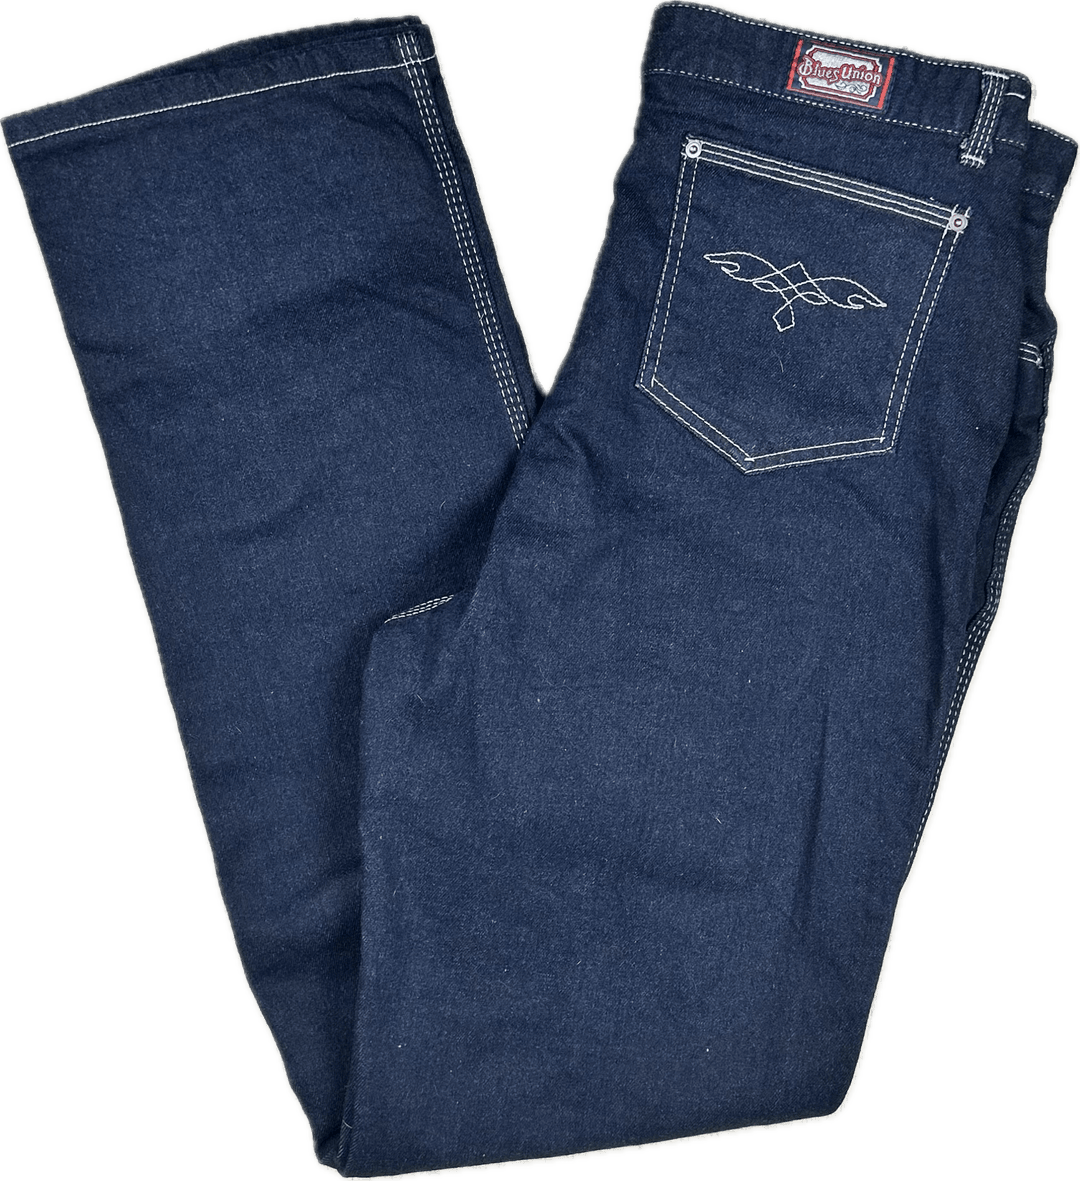 Genuine 1970's Australian Made Blues Union Jeans - Suit Size 14 - Jean Pool